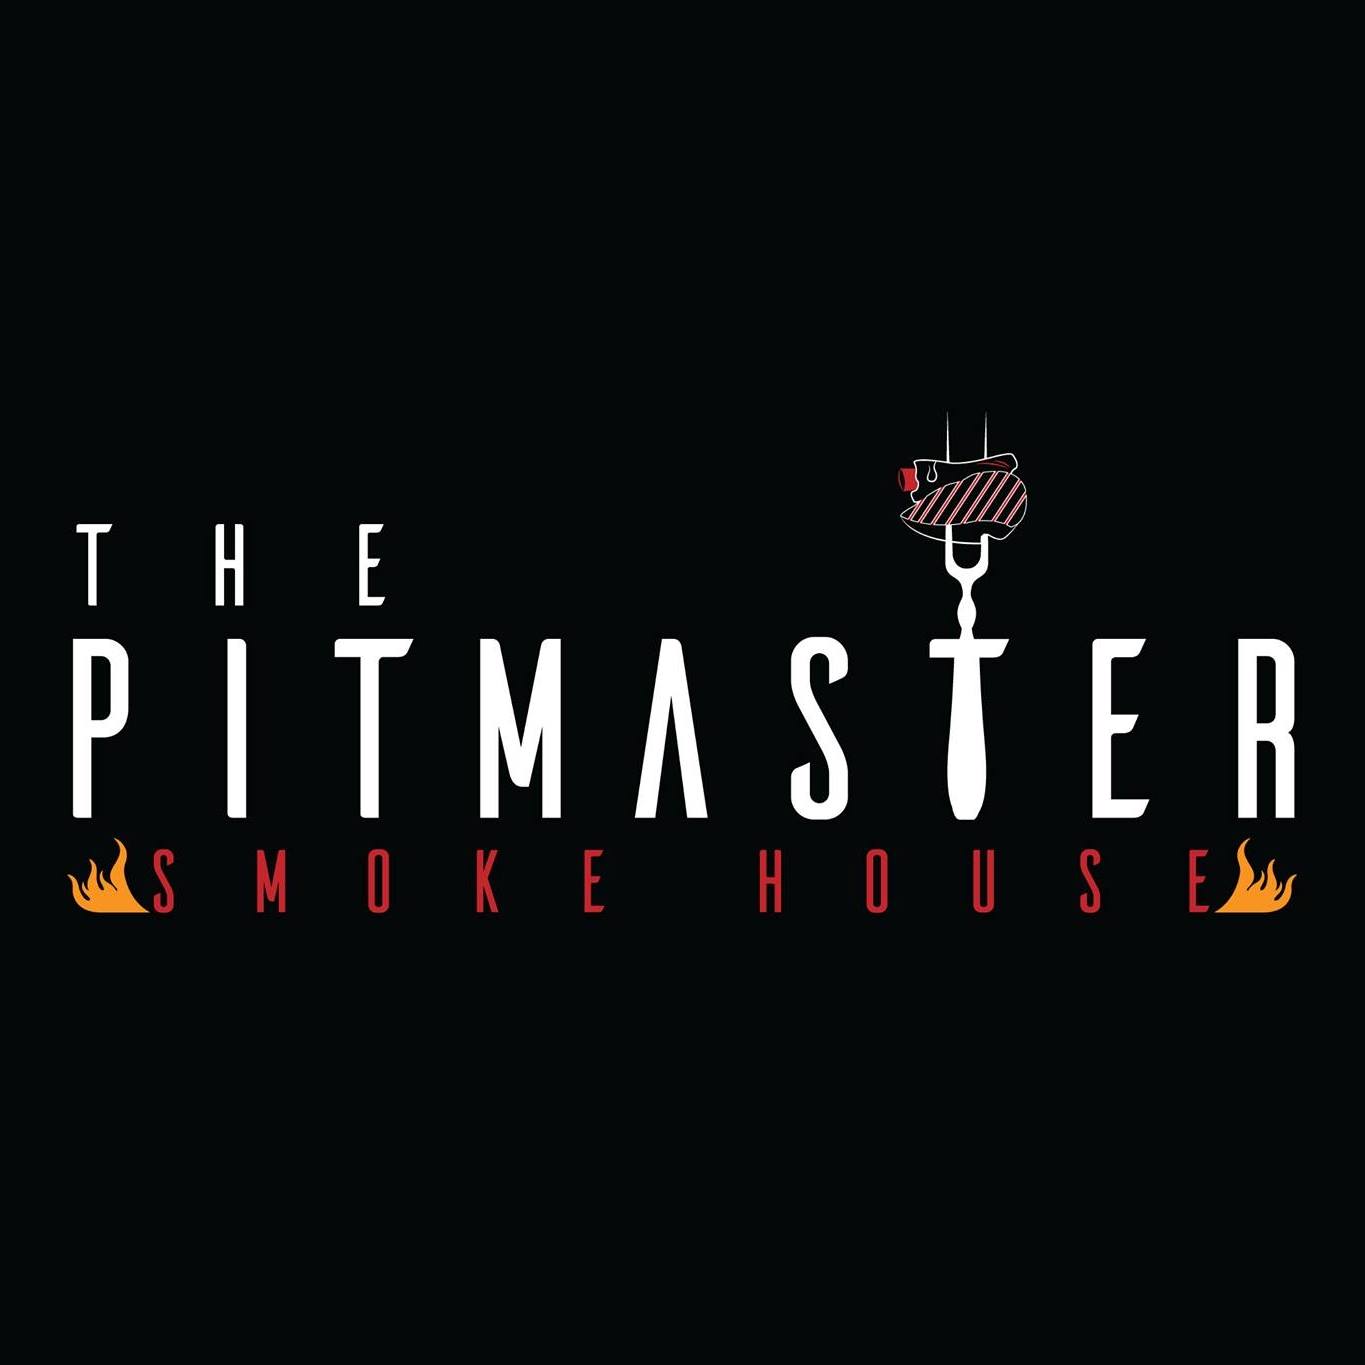 ذا بت ماستر سموك هاوس The Pitmaster Smoke House